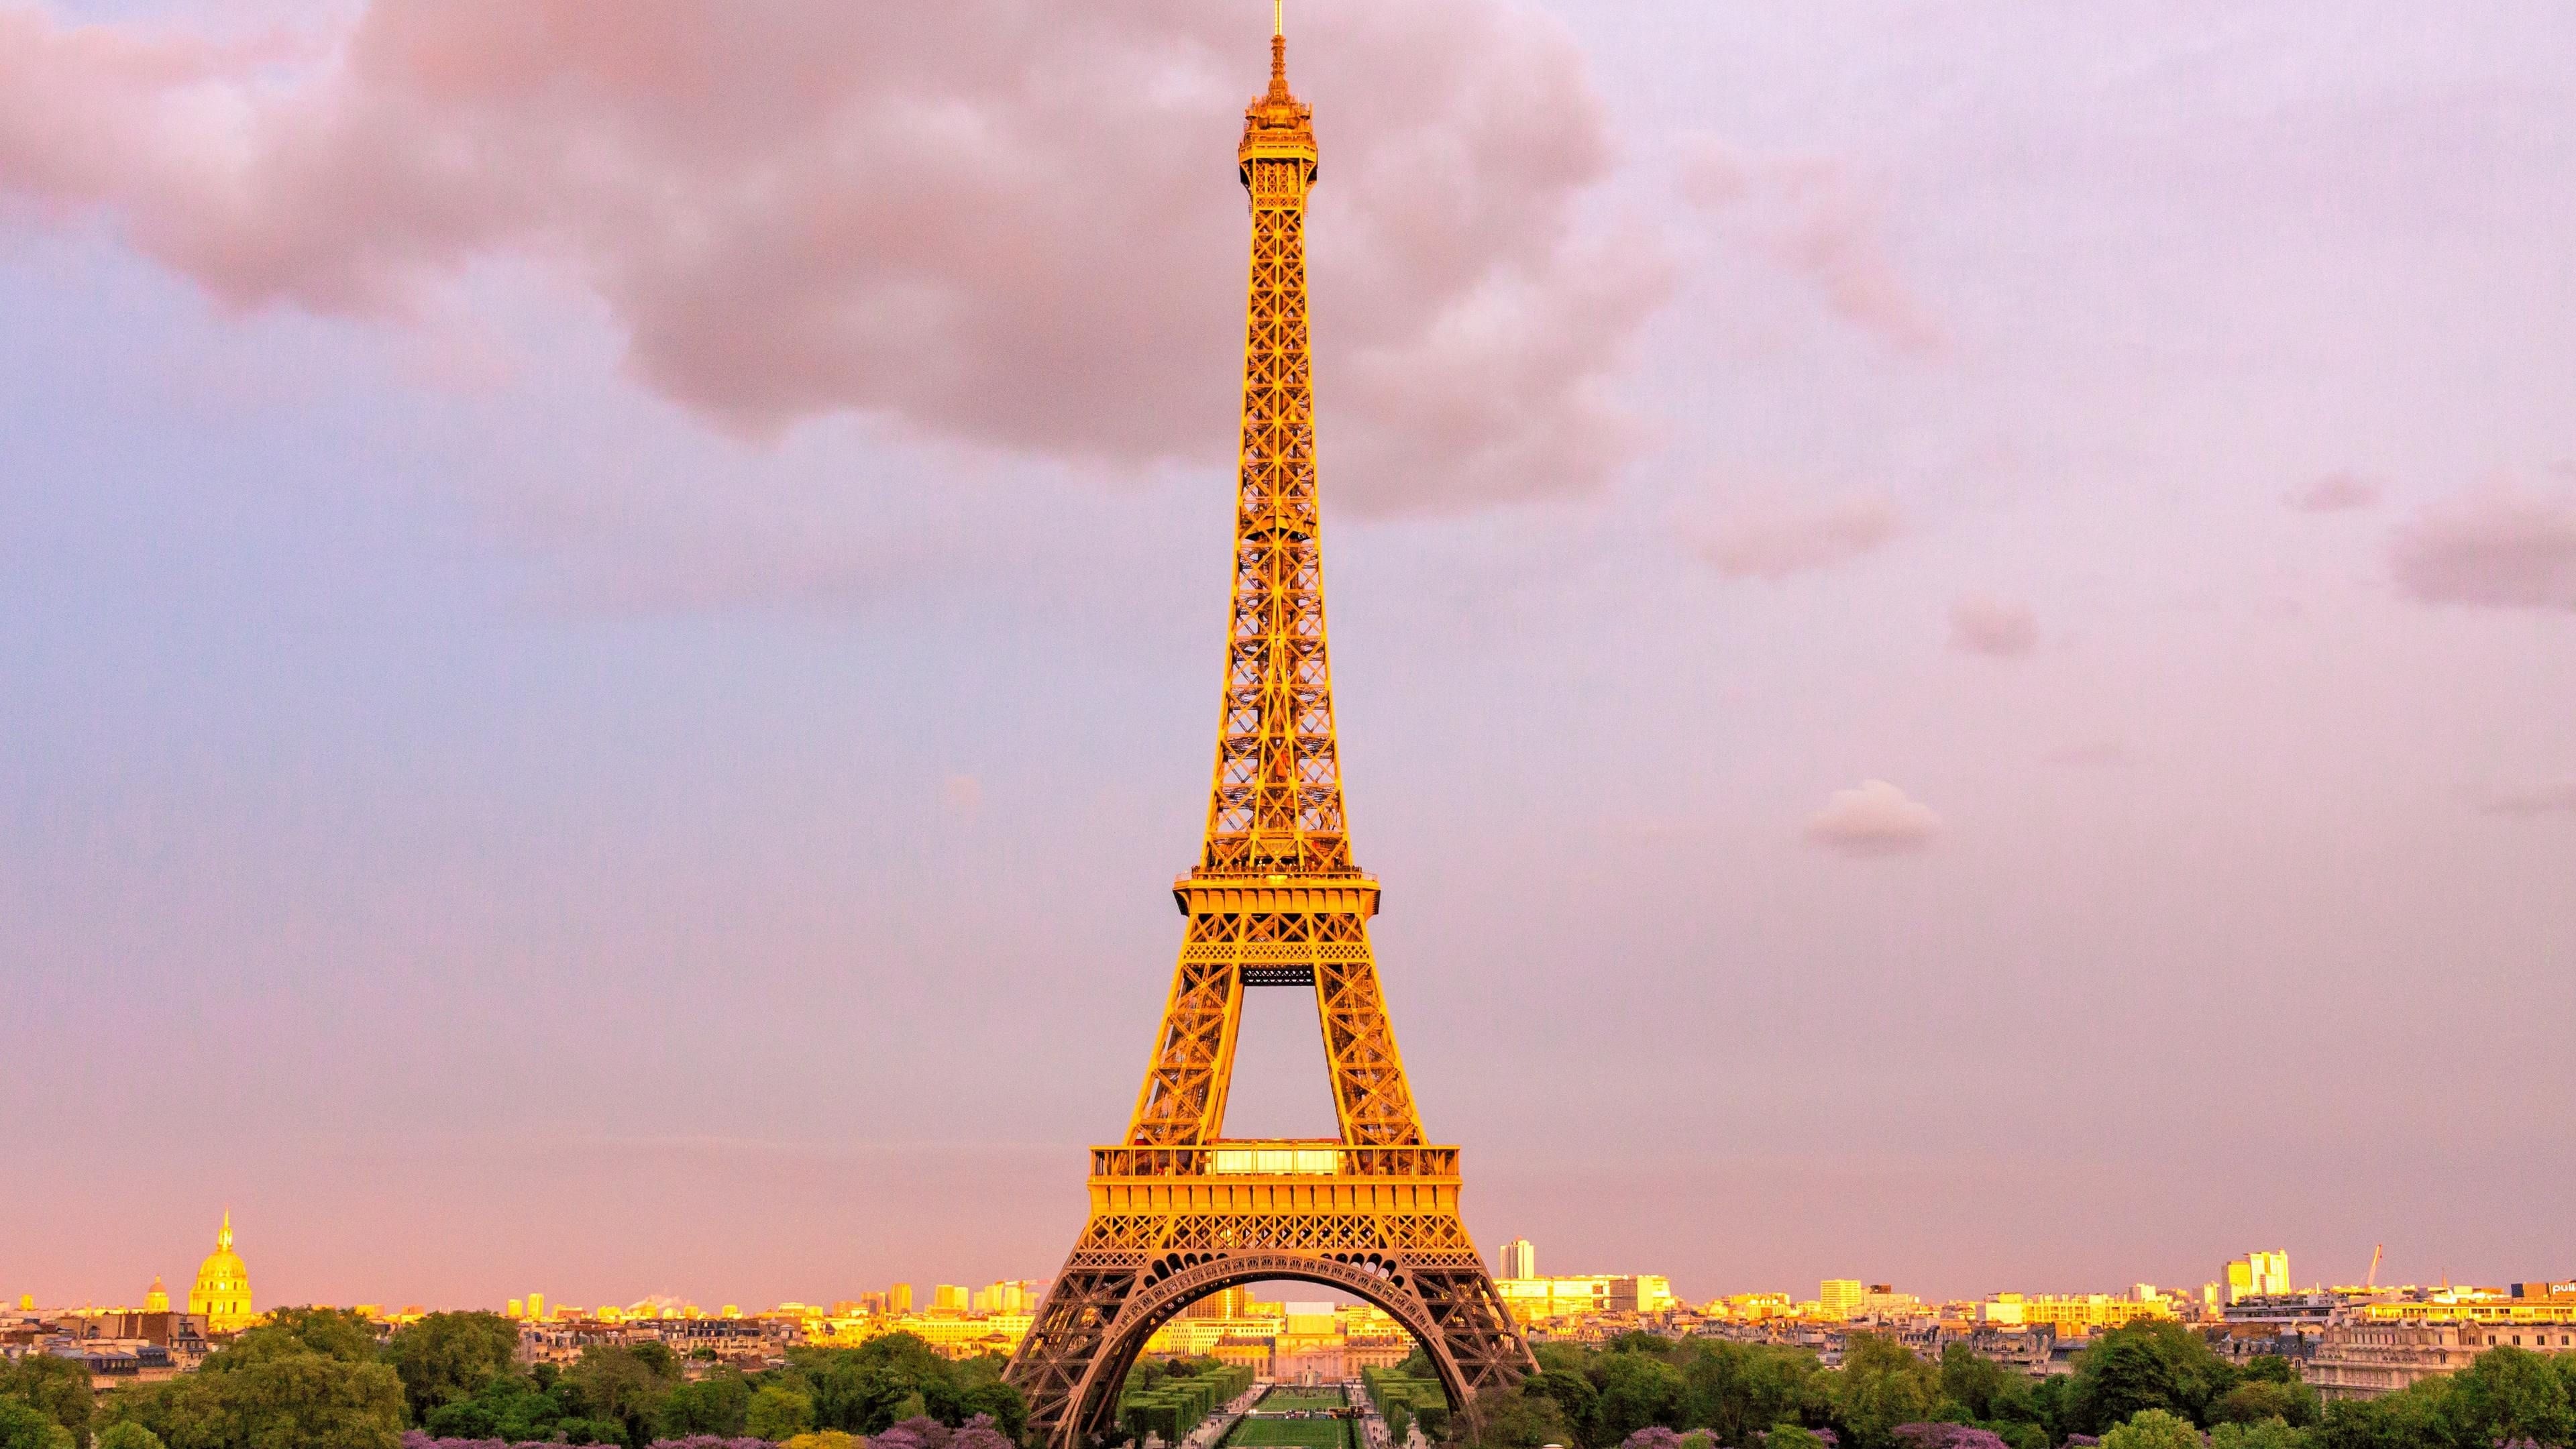 Paris: Eiffel Tower, A wrought-iron lattice tower on the Champ de Mars. 3840x2160 4K Background.